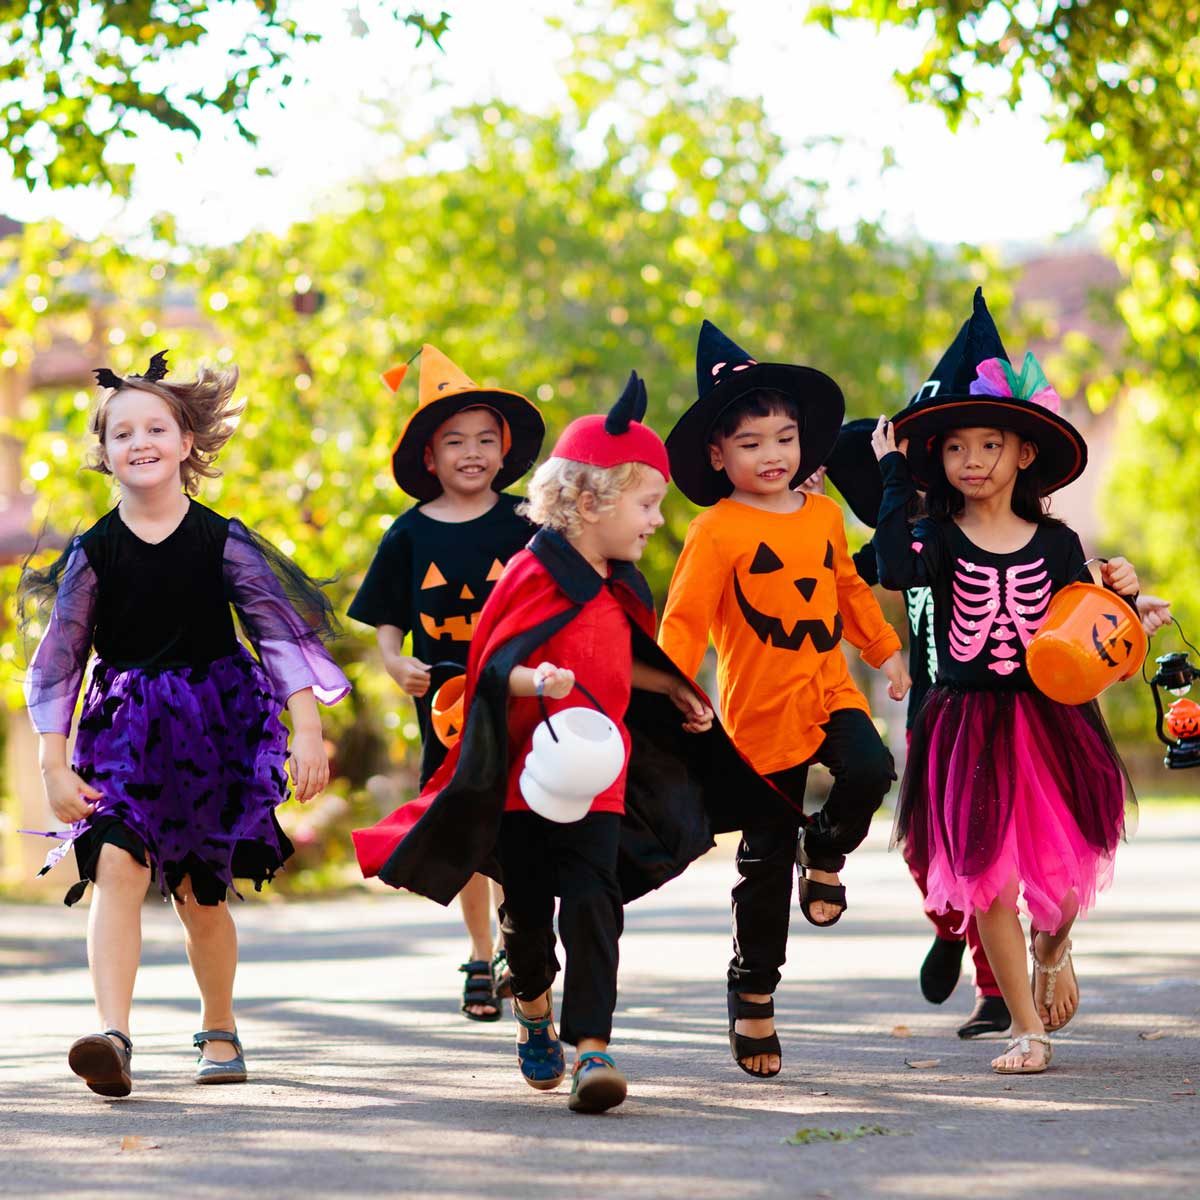 【60%OFF!】 Kids Suit Home Costume Halloween Costume_a A agilpagos.com.ar